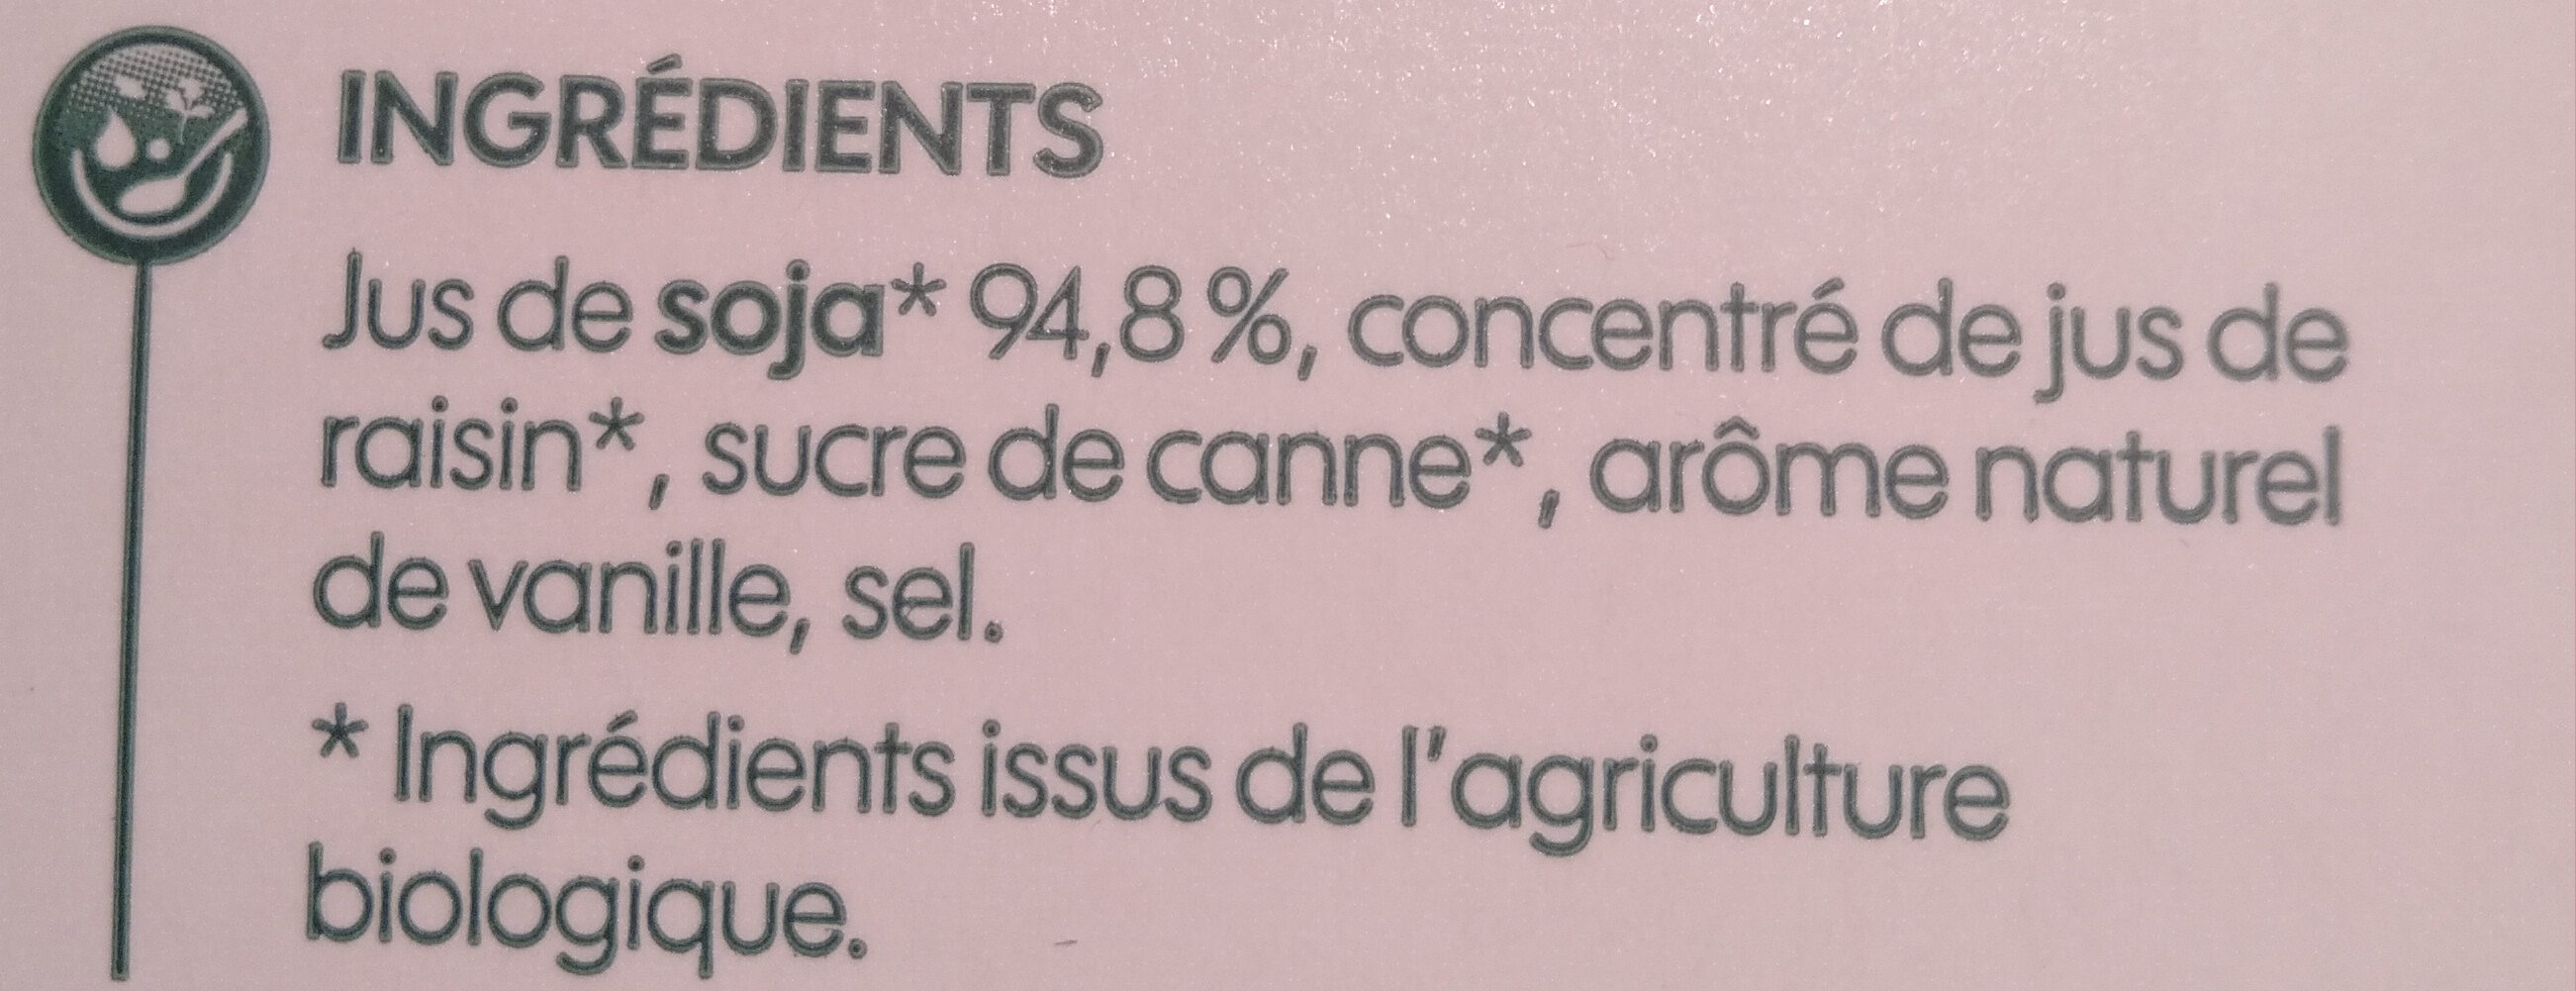 Lait soja vanille - Ingredientes - fr